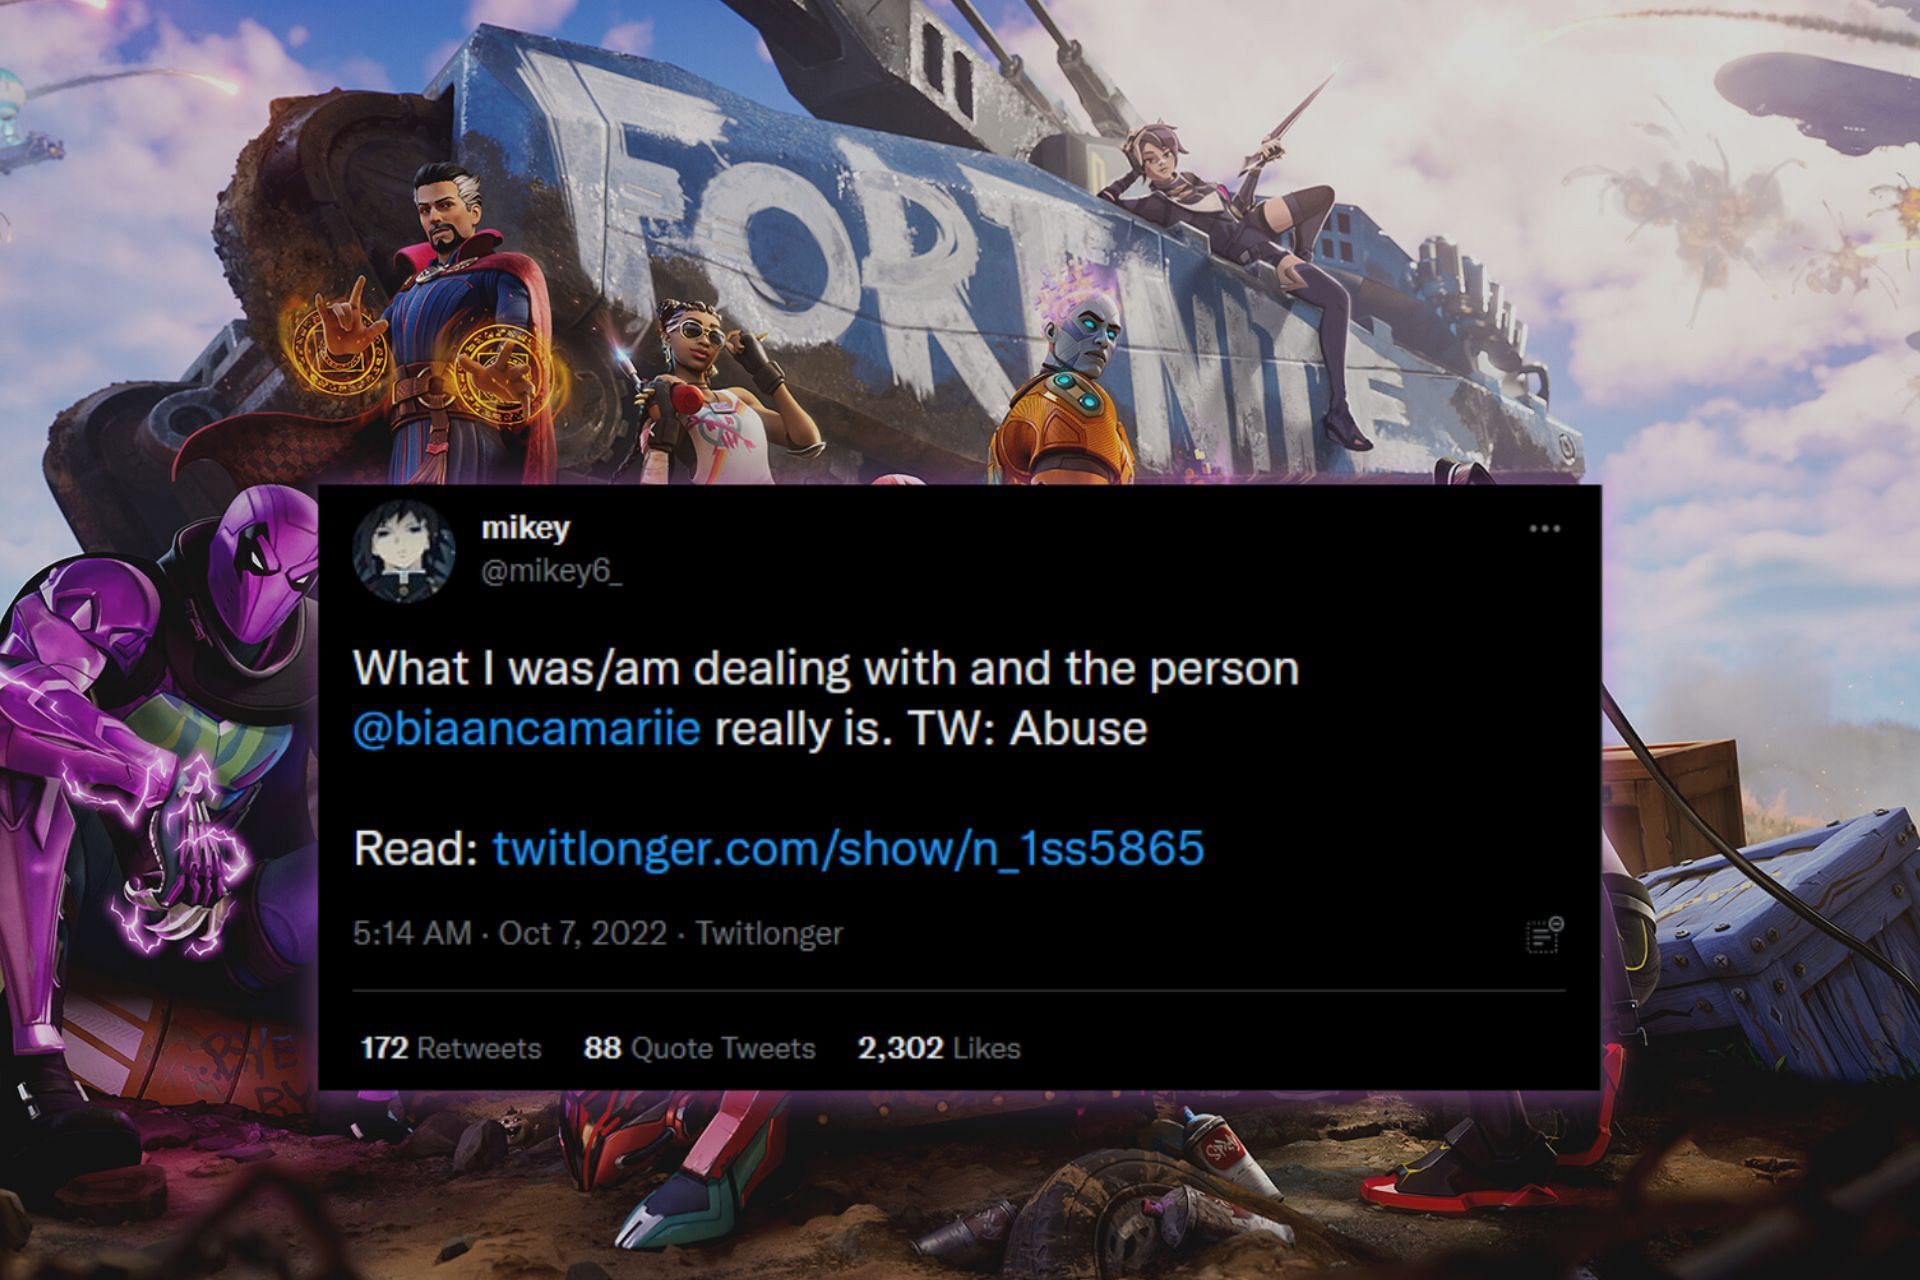 Fortnite streamer Mikey6 shares his experience via a TwitLonger post (Image via Sportskeeda)